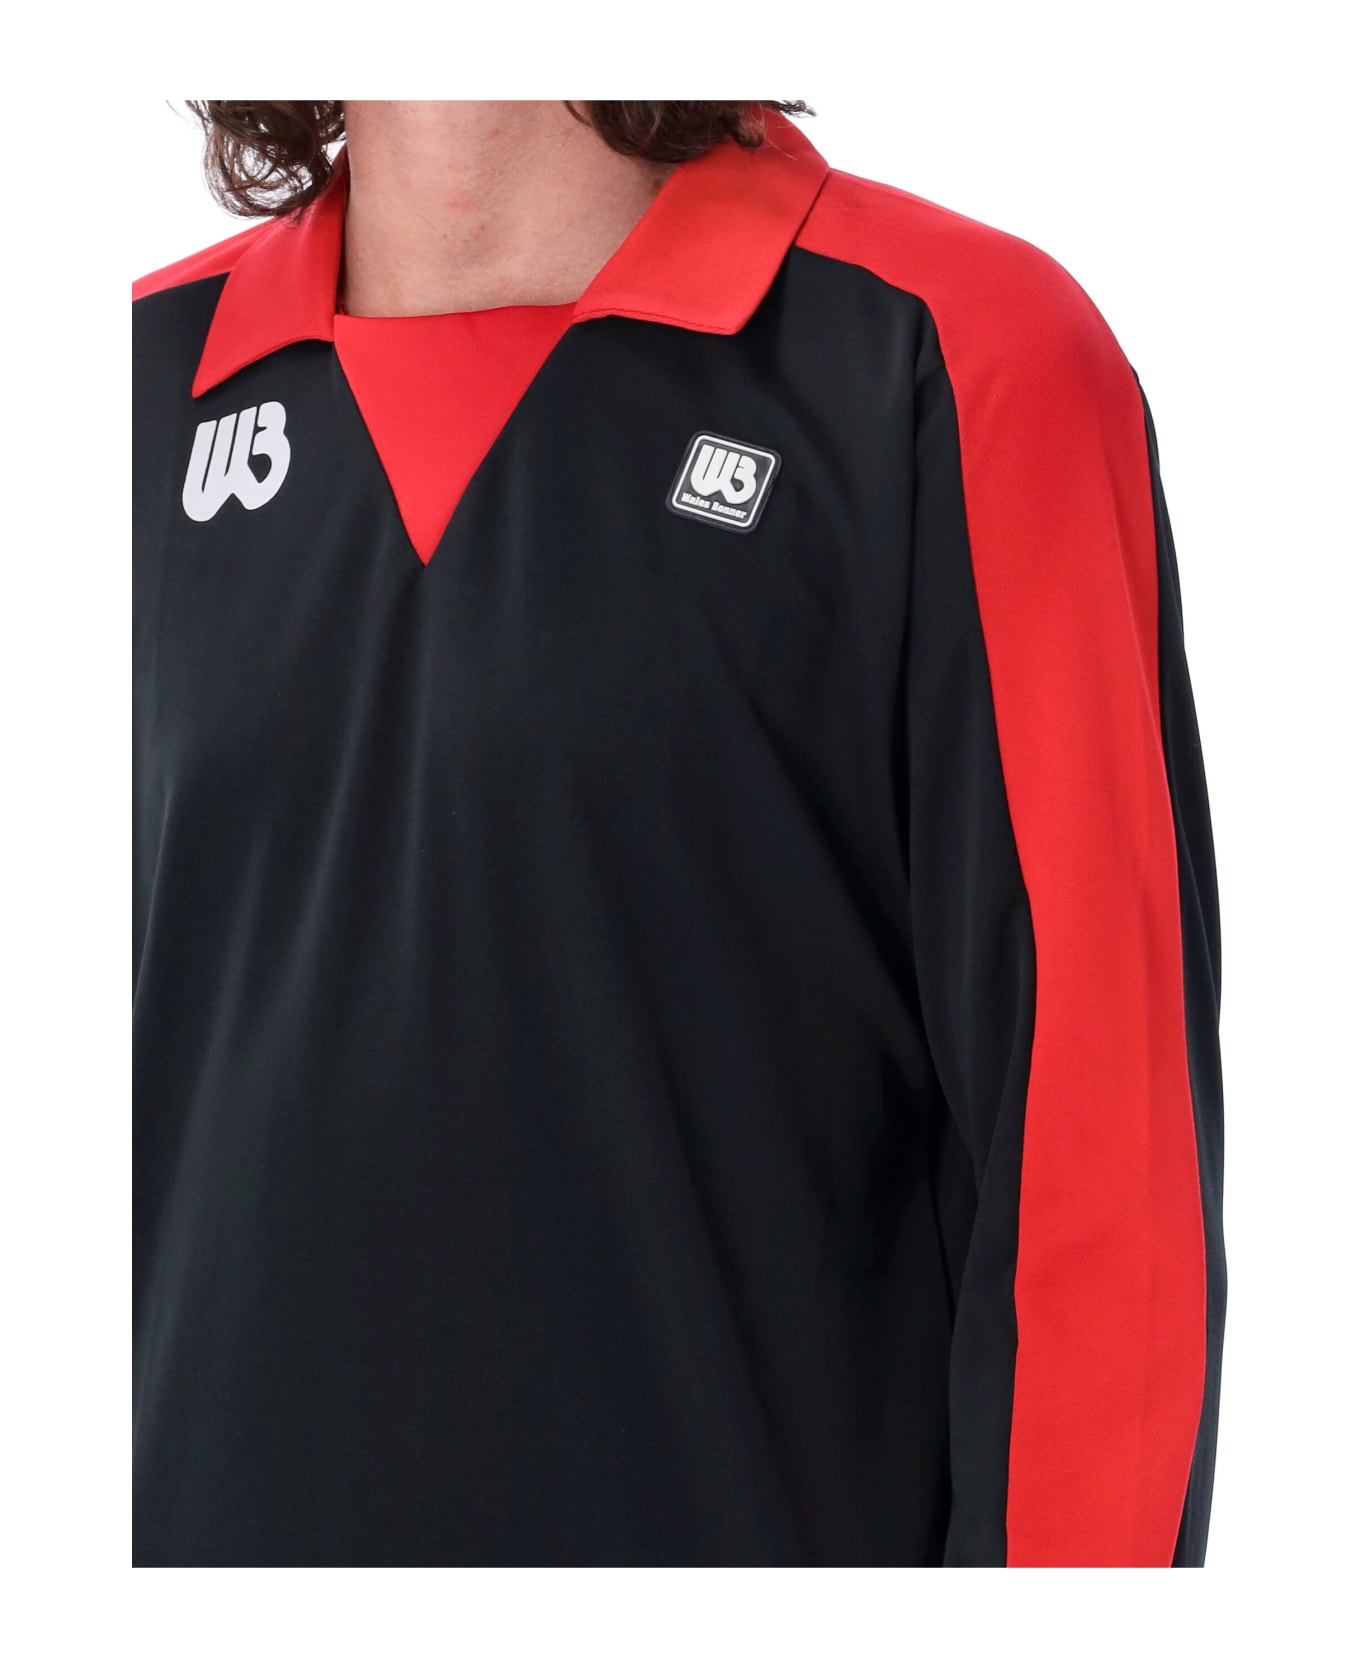 Wales Bonner Home Jersey Polo Shirt - BLACK